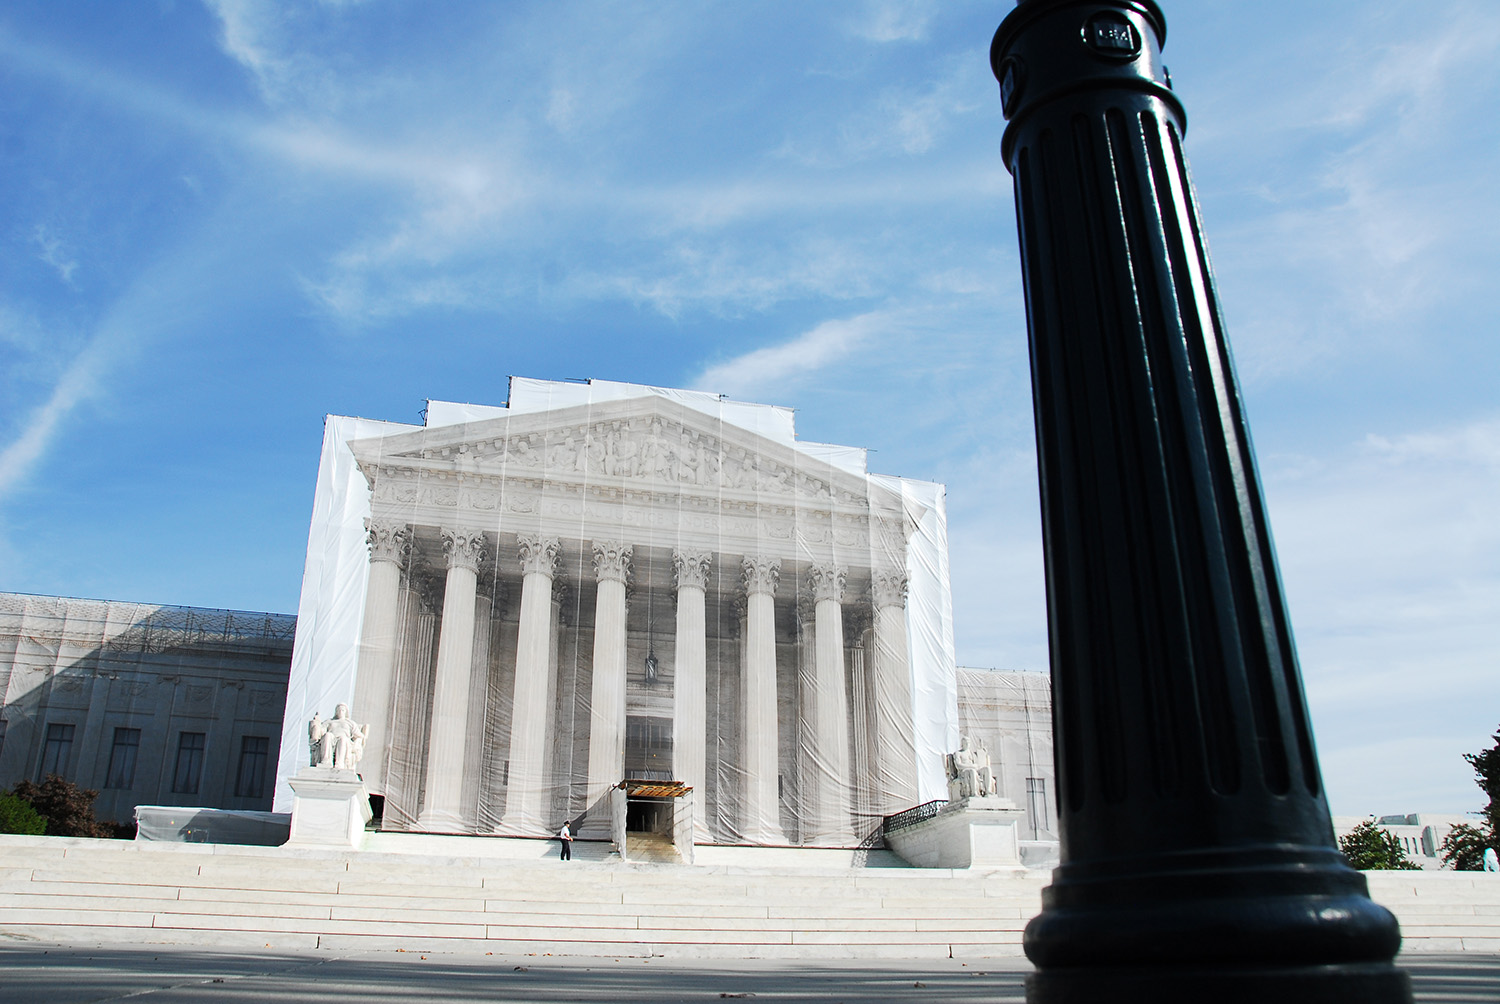 US_Supreme_Court_Facade_Renovation_Wrap_Landmark_Tourism_Washington_DC.jpg